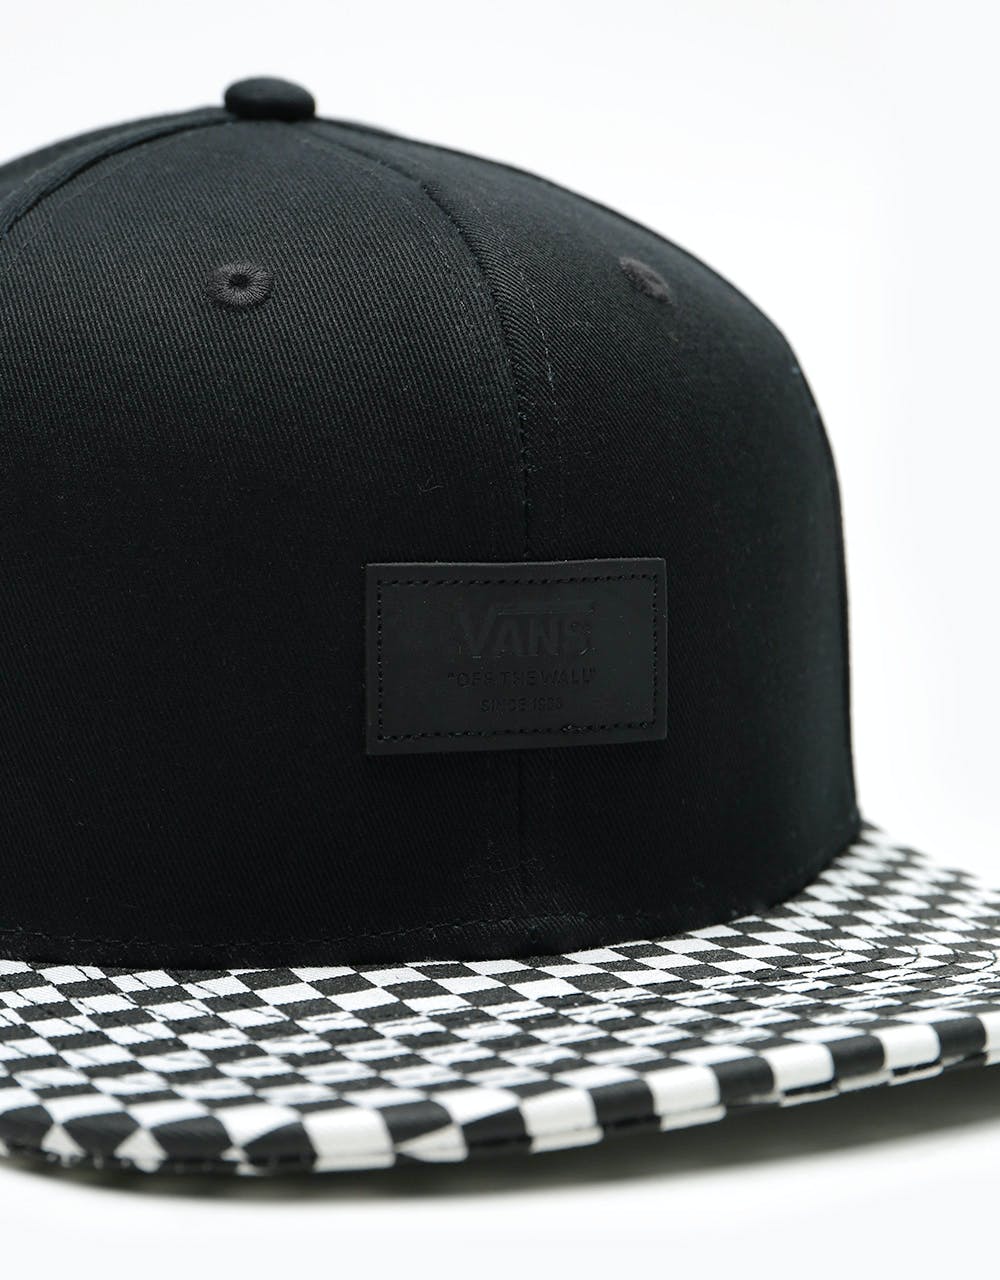 Vans Allover It Snapback Cap - Black/White Check